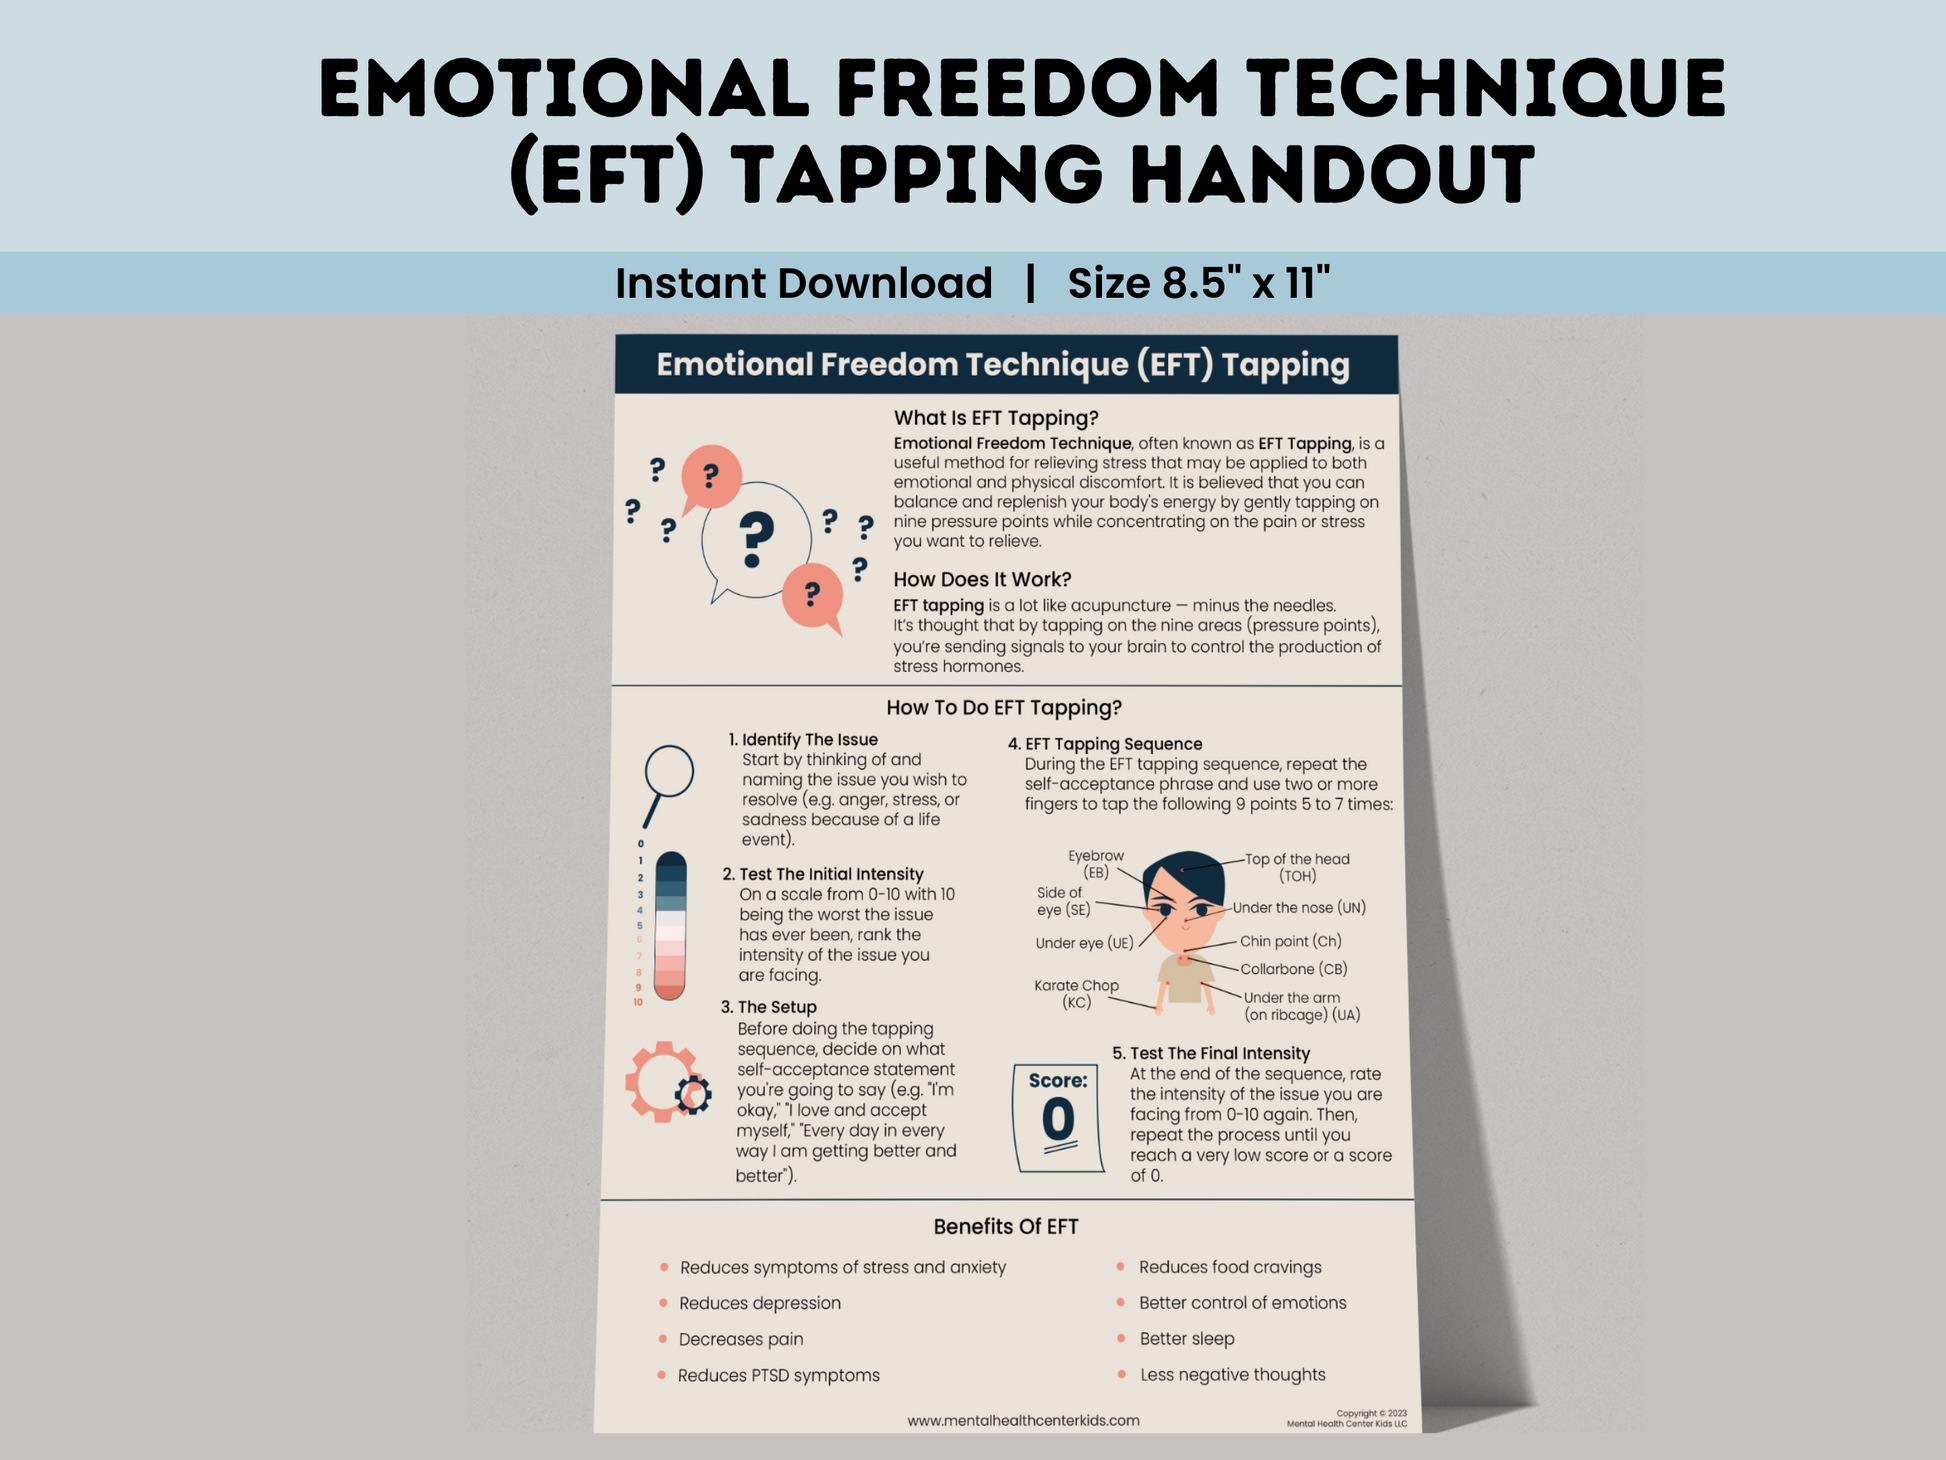 l'EFT : emotional freedom techniques : mode d'emploi